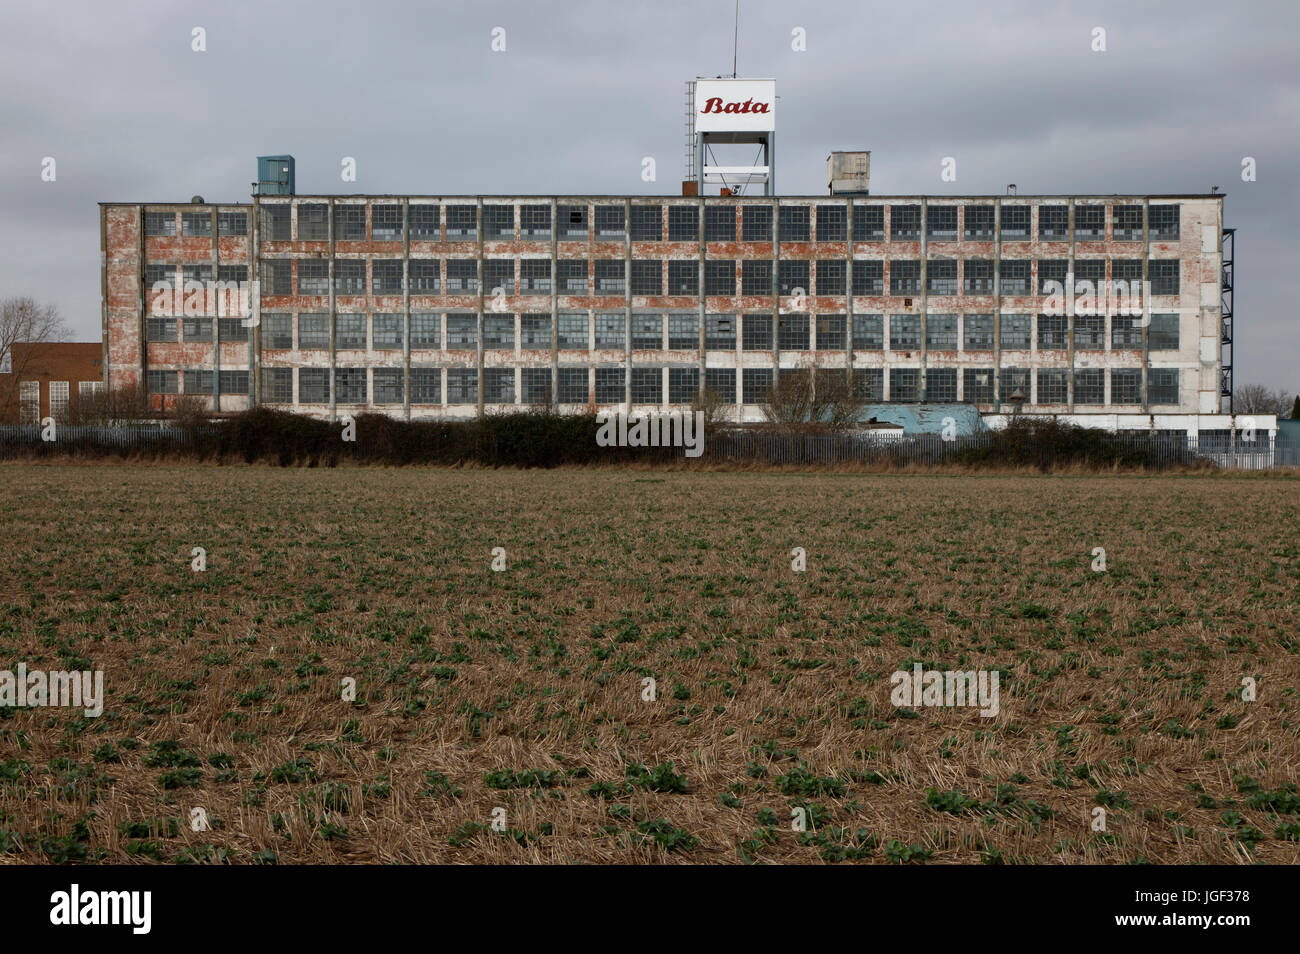 Bata factory, East Tilbury, Essex, England, UK Stock Photo